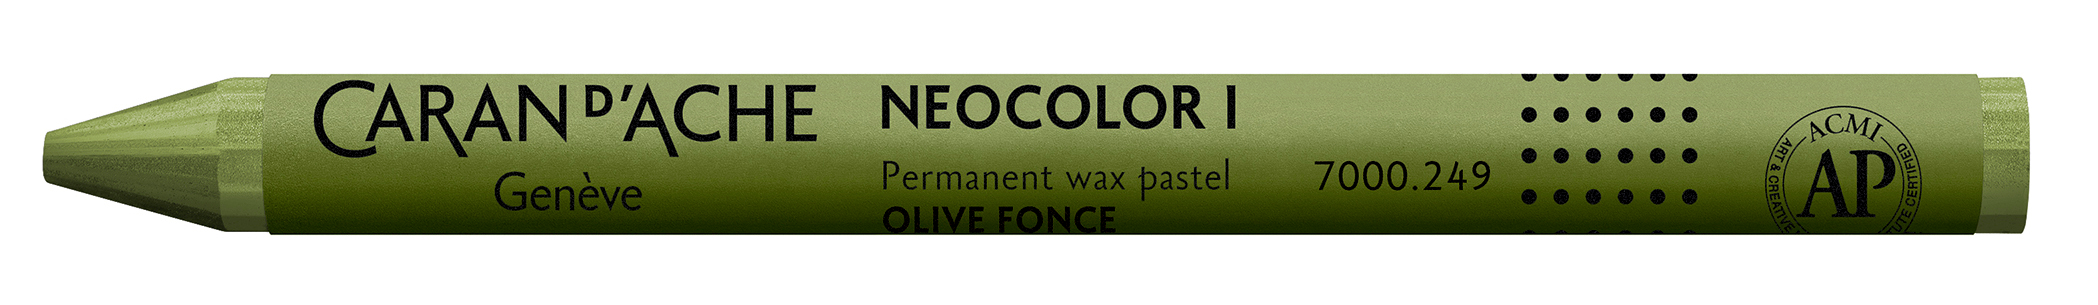 CARAN D'ACHE Crayons de cire Neocolor 1 7000.249 olive